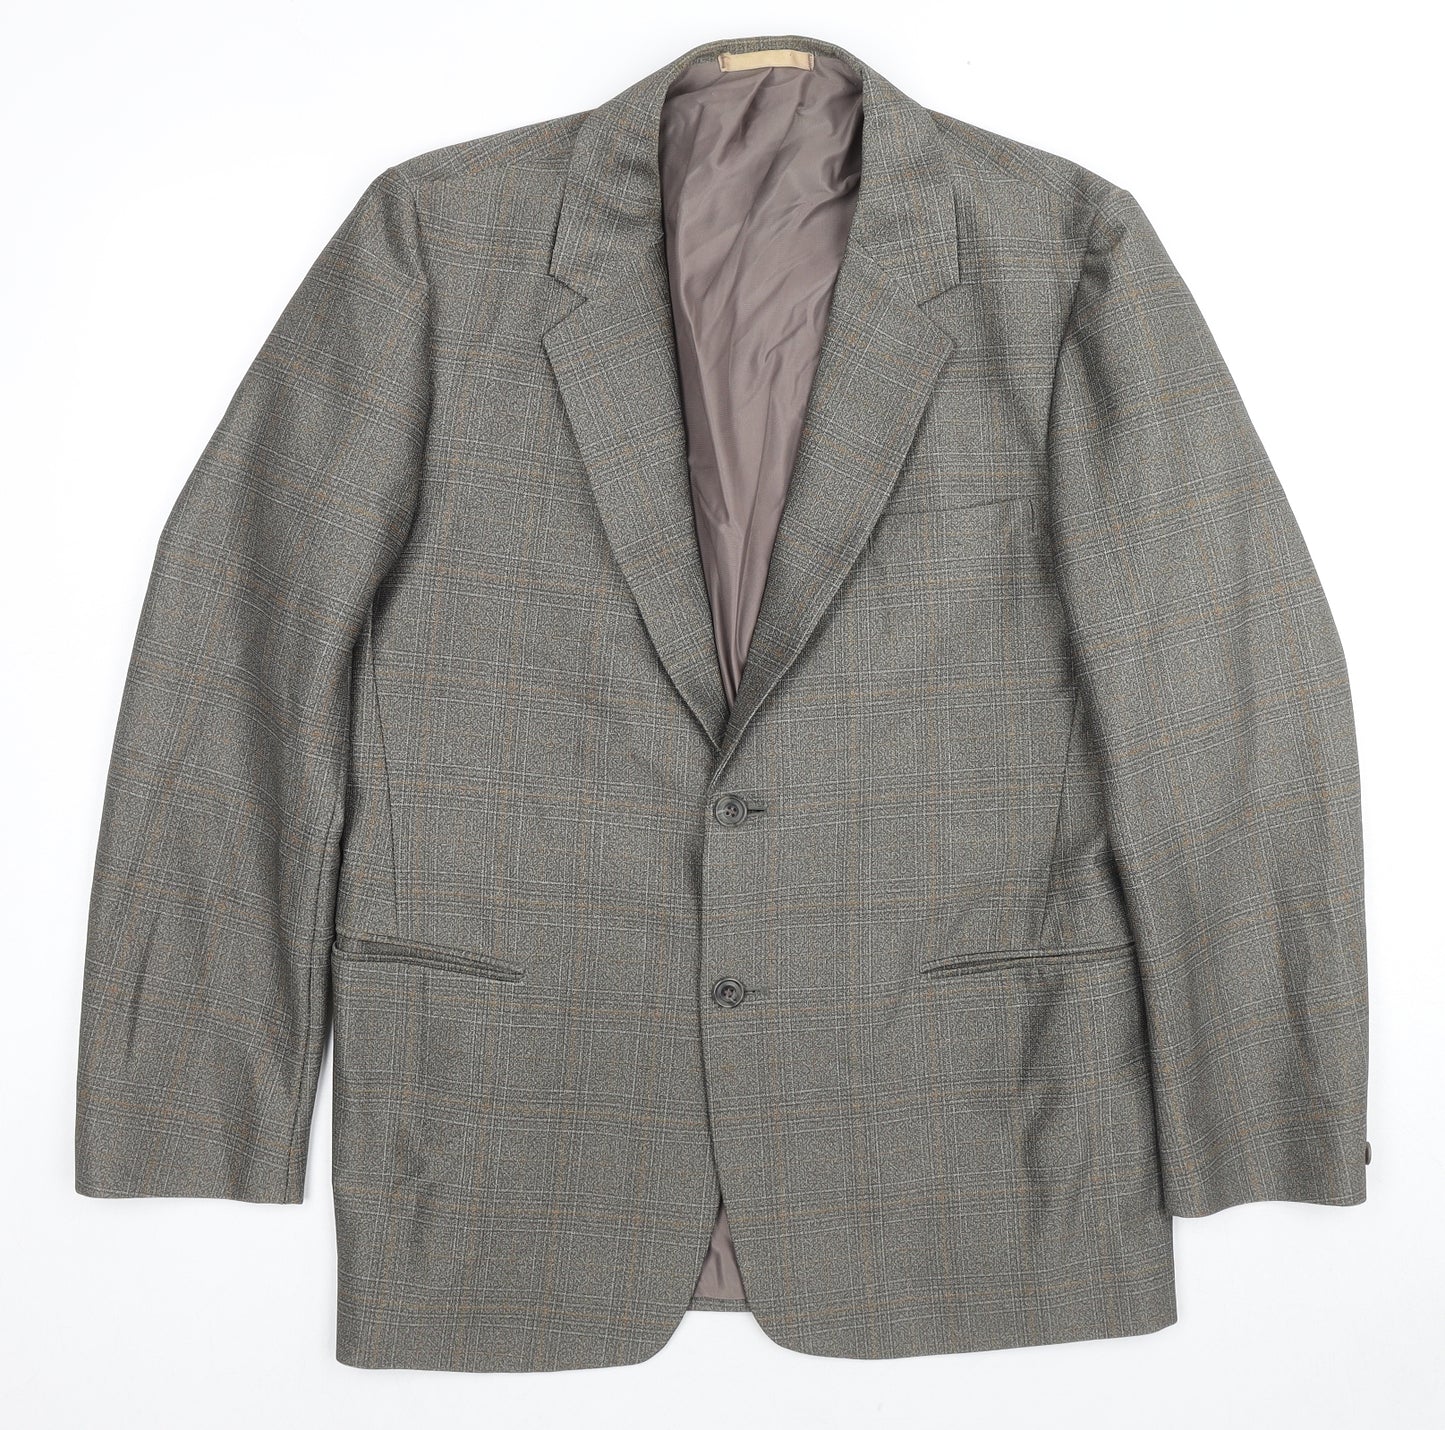 Terylene Mens Grey Check Polyester Jacket Suit Jacket Size 36 Regular